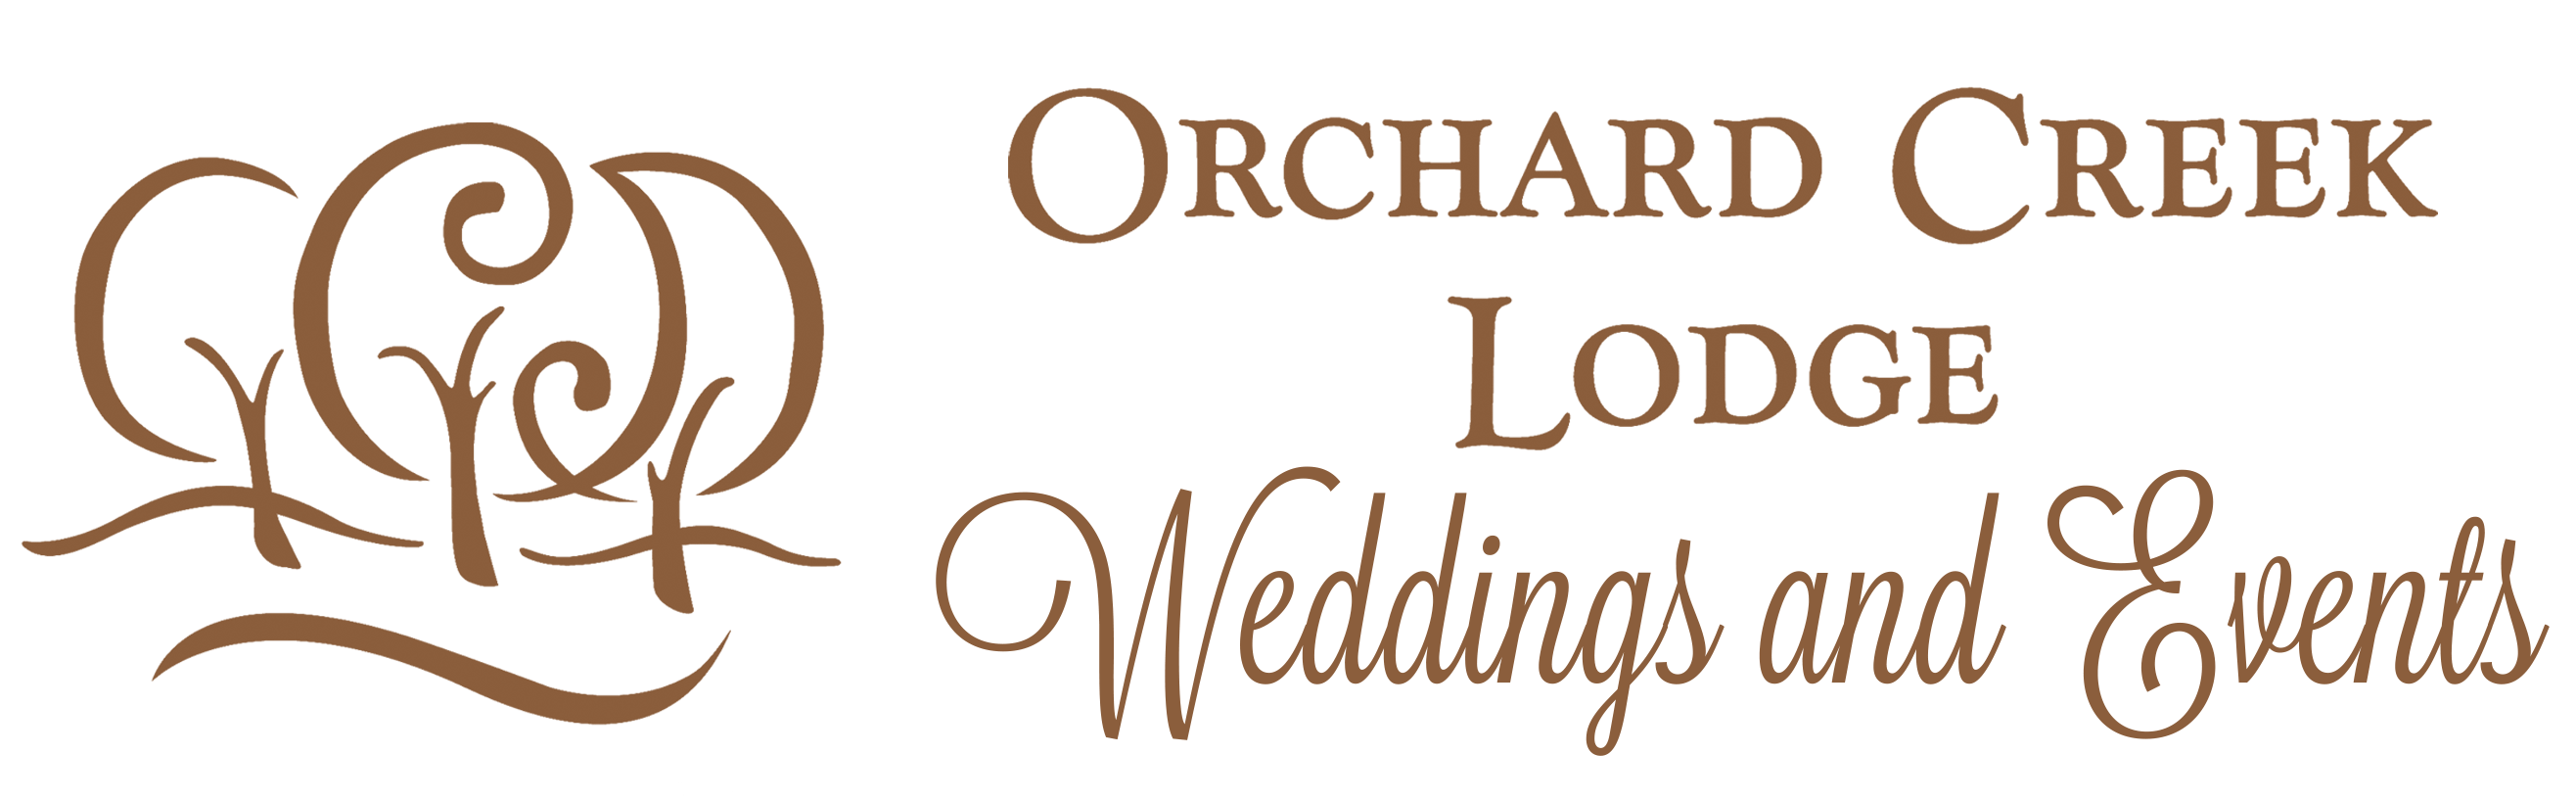 OCL Wedding